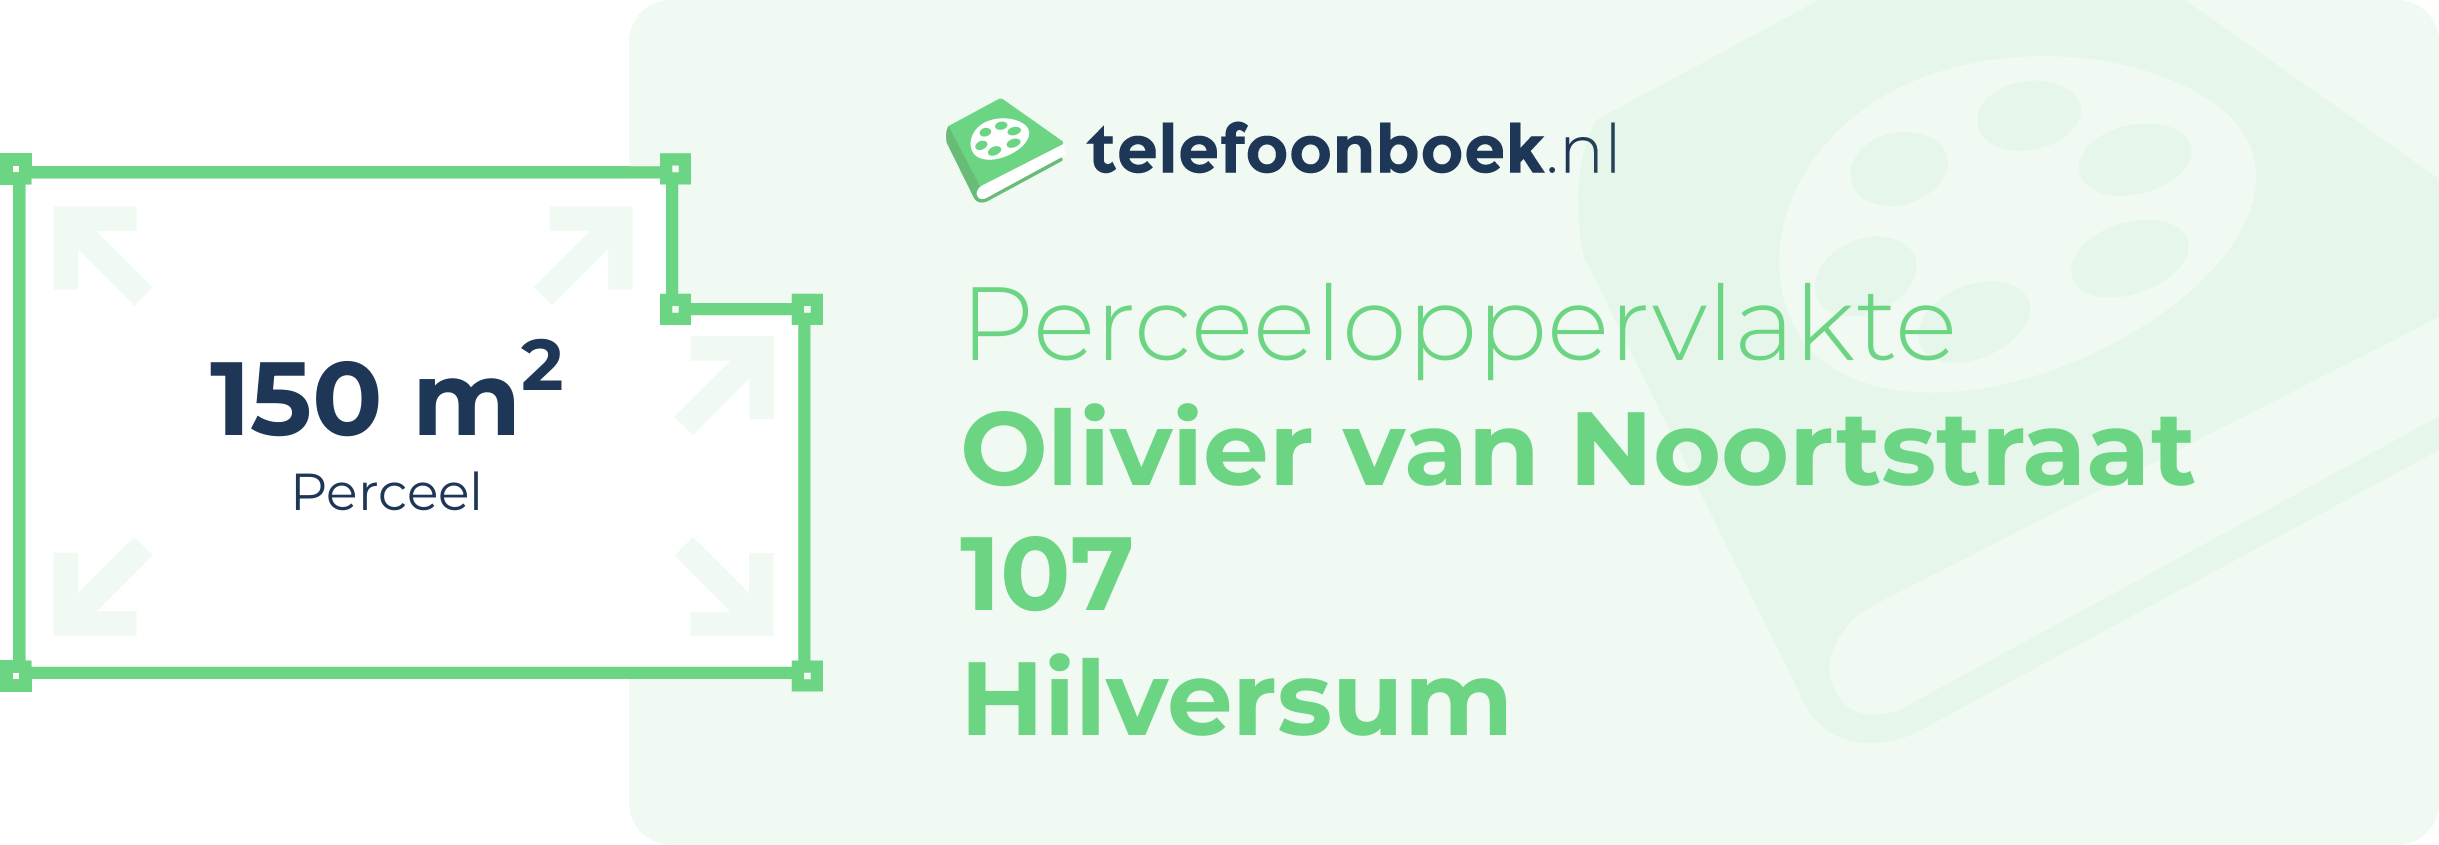 Perceeloppervlakte Olivier Van Noortstraat 107 Hilversum